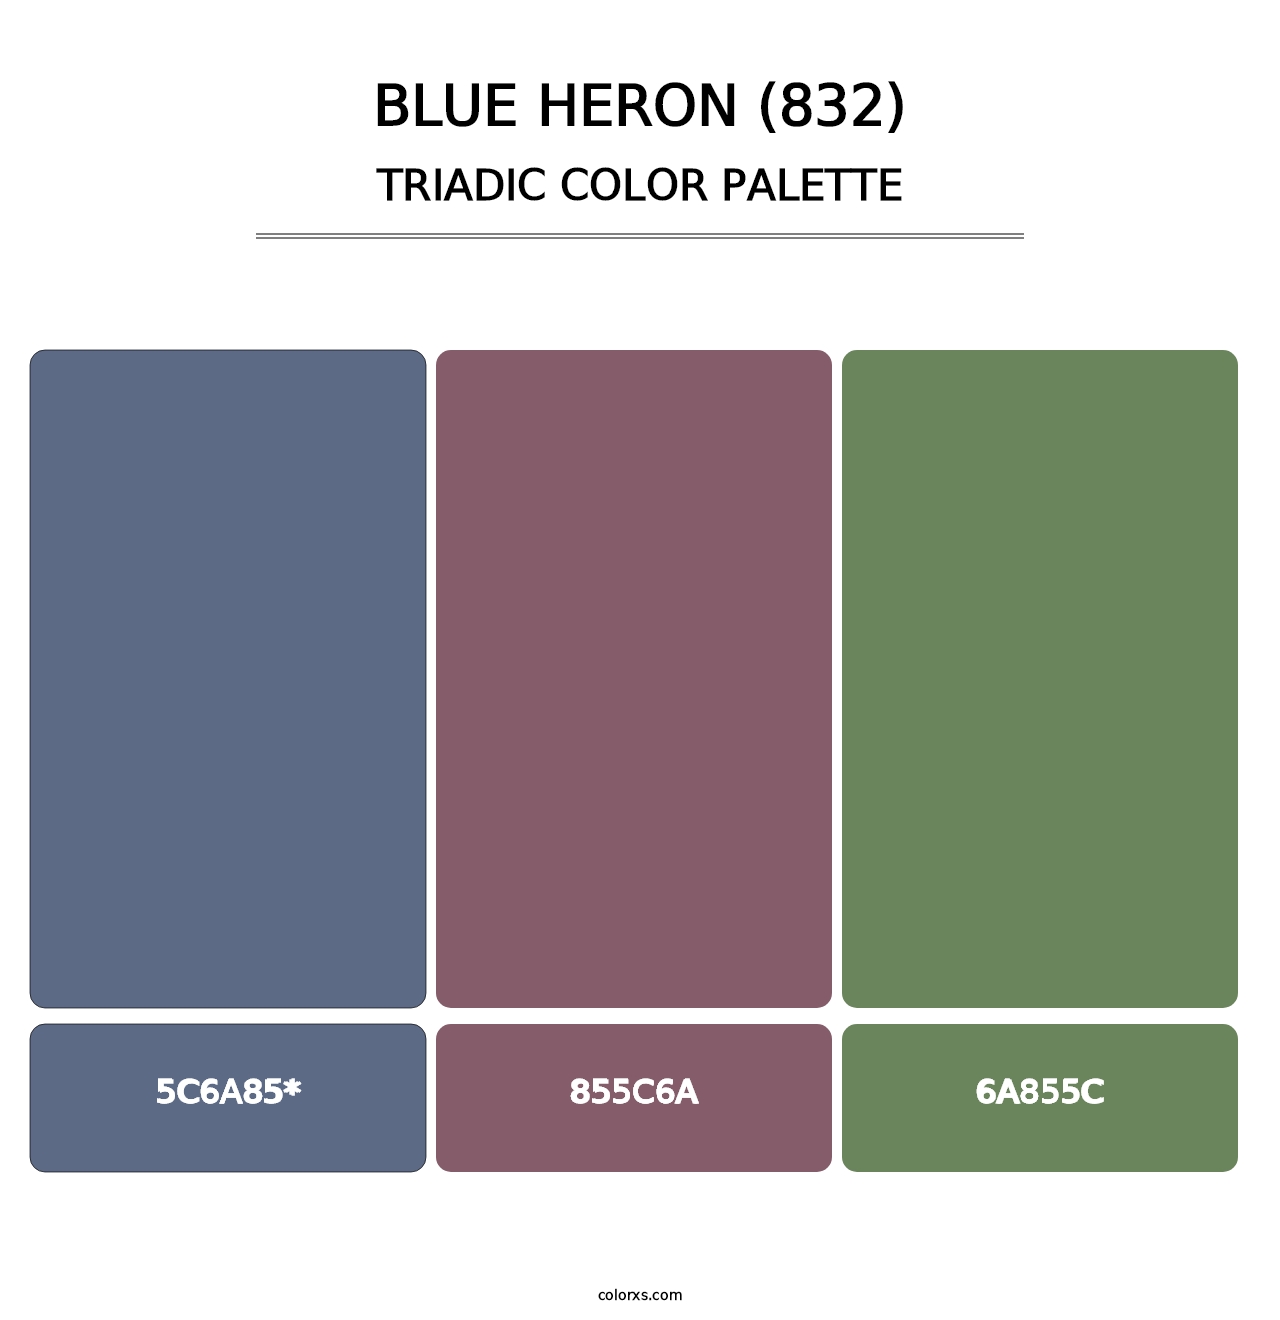 Blue Heron (832) - Triadic Color Palette